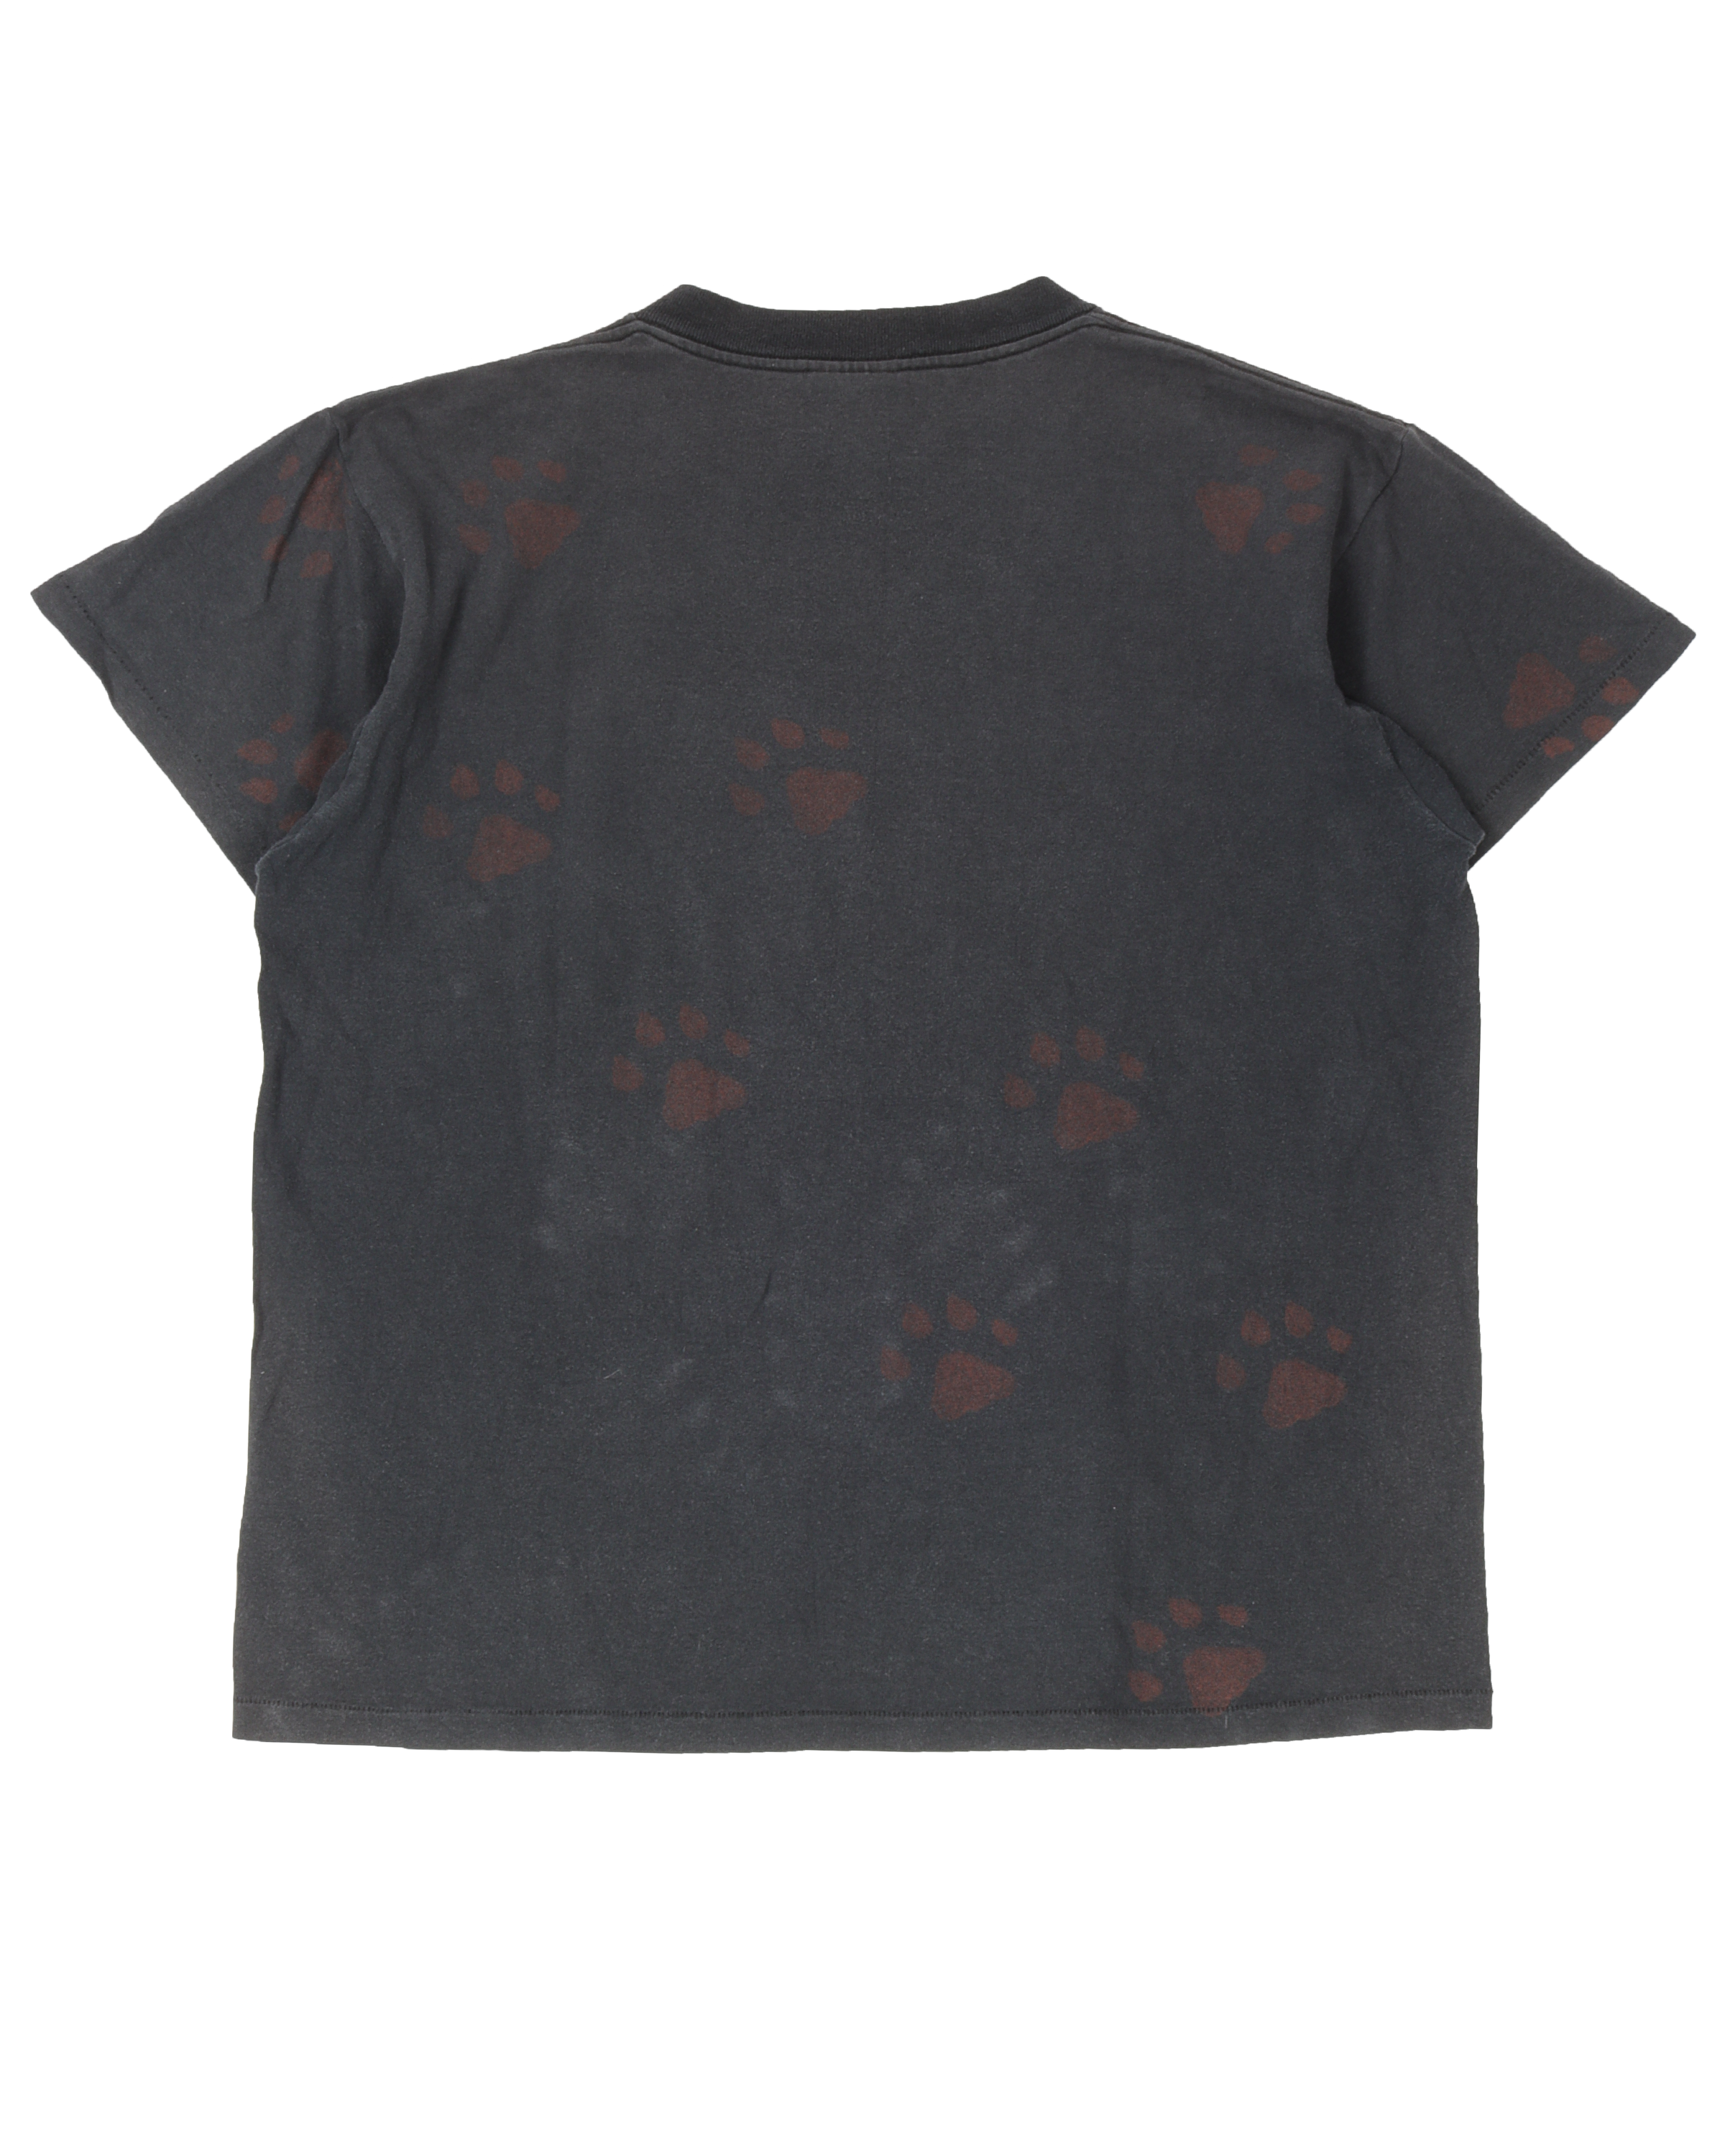 Cougar Paw Print T-shirt